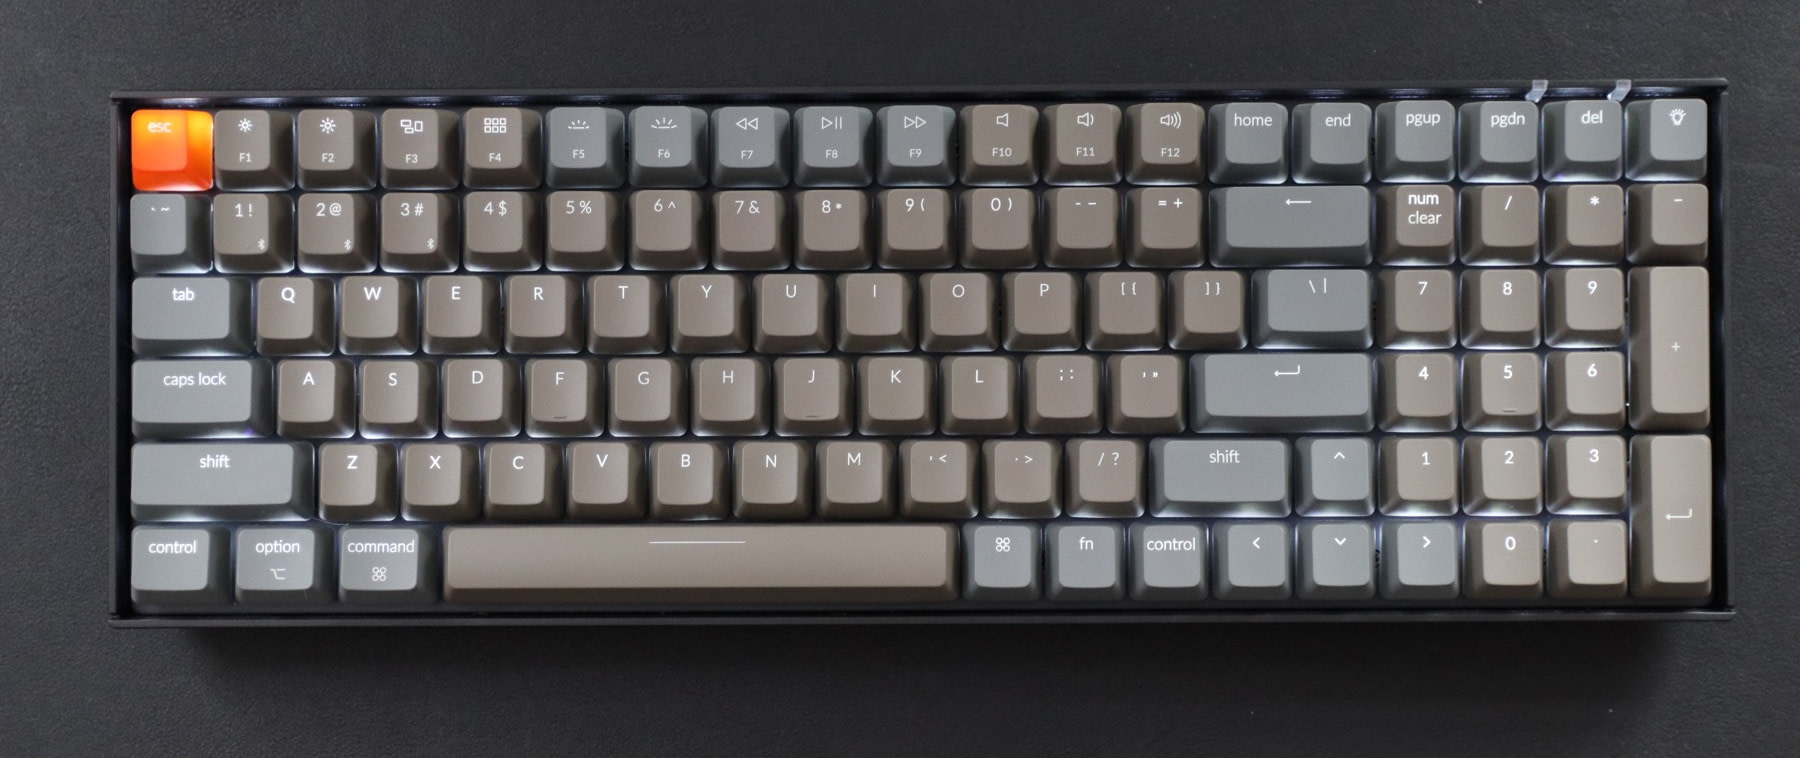 best mac keyboards: keychron